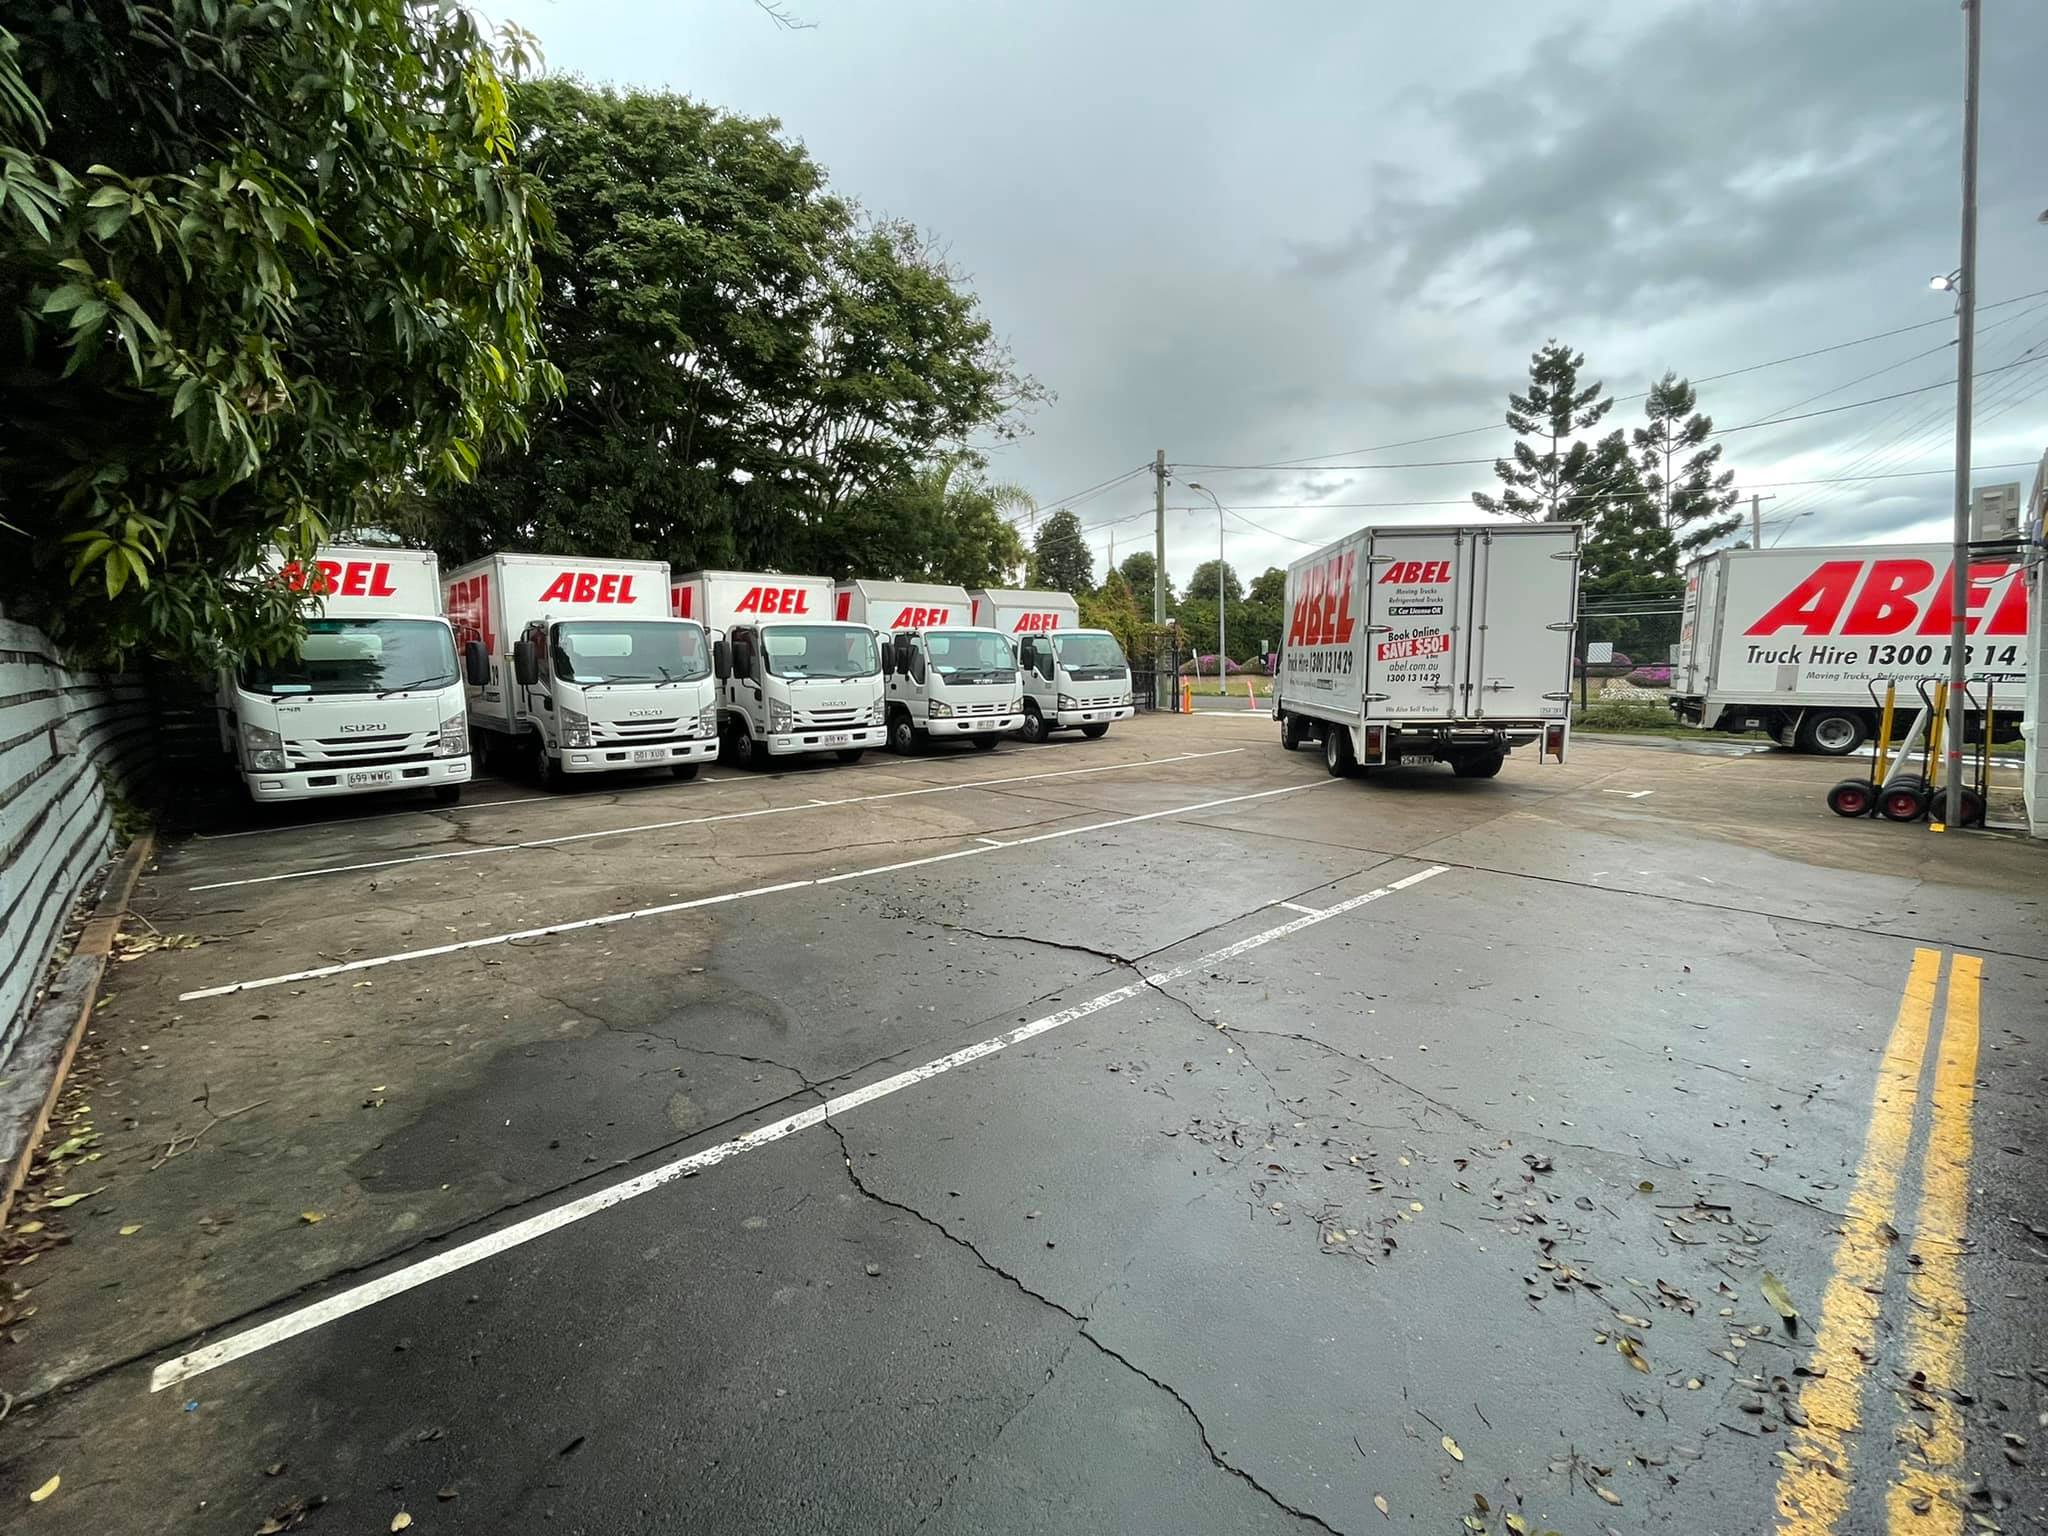 Abel Truck Hire & Truck Rental Ipswich Moving Company in Ipswich